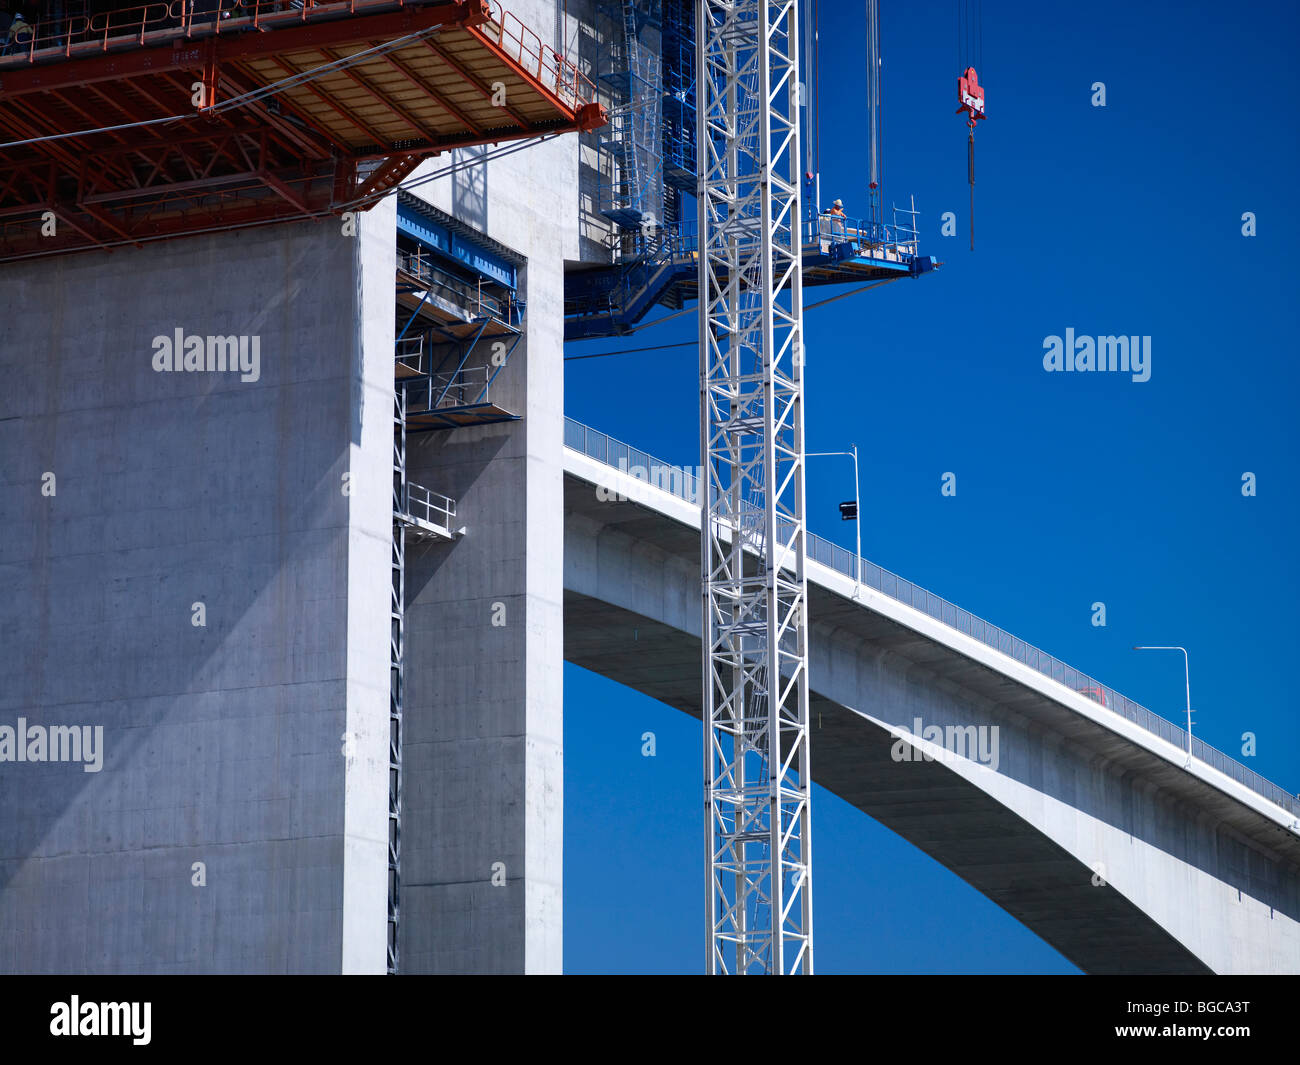 Construction of the second Gateway Bridge Brisbane Australia Stock Photo